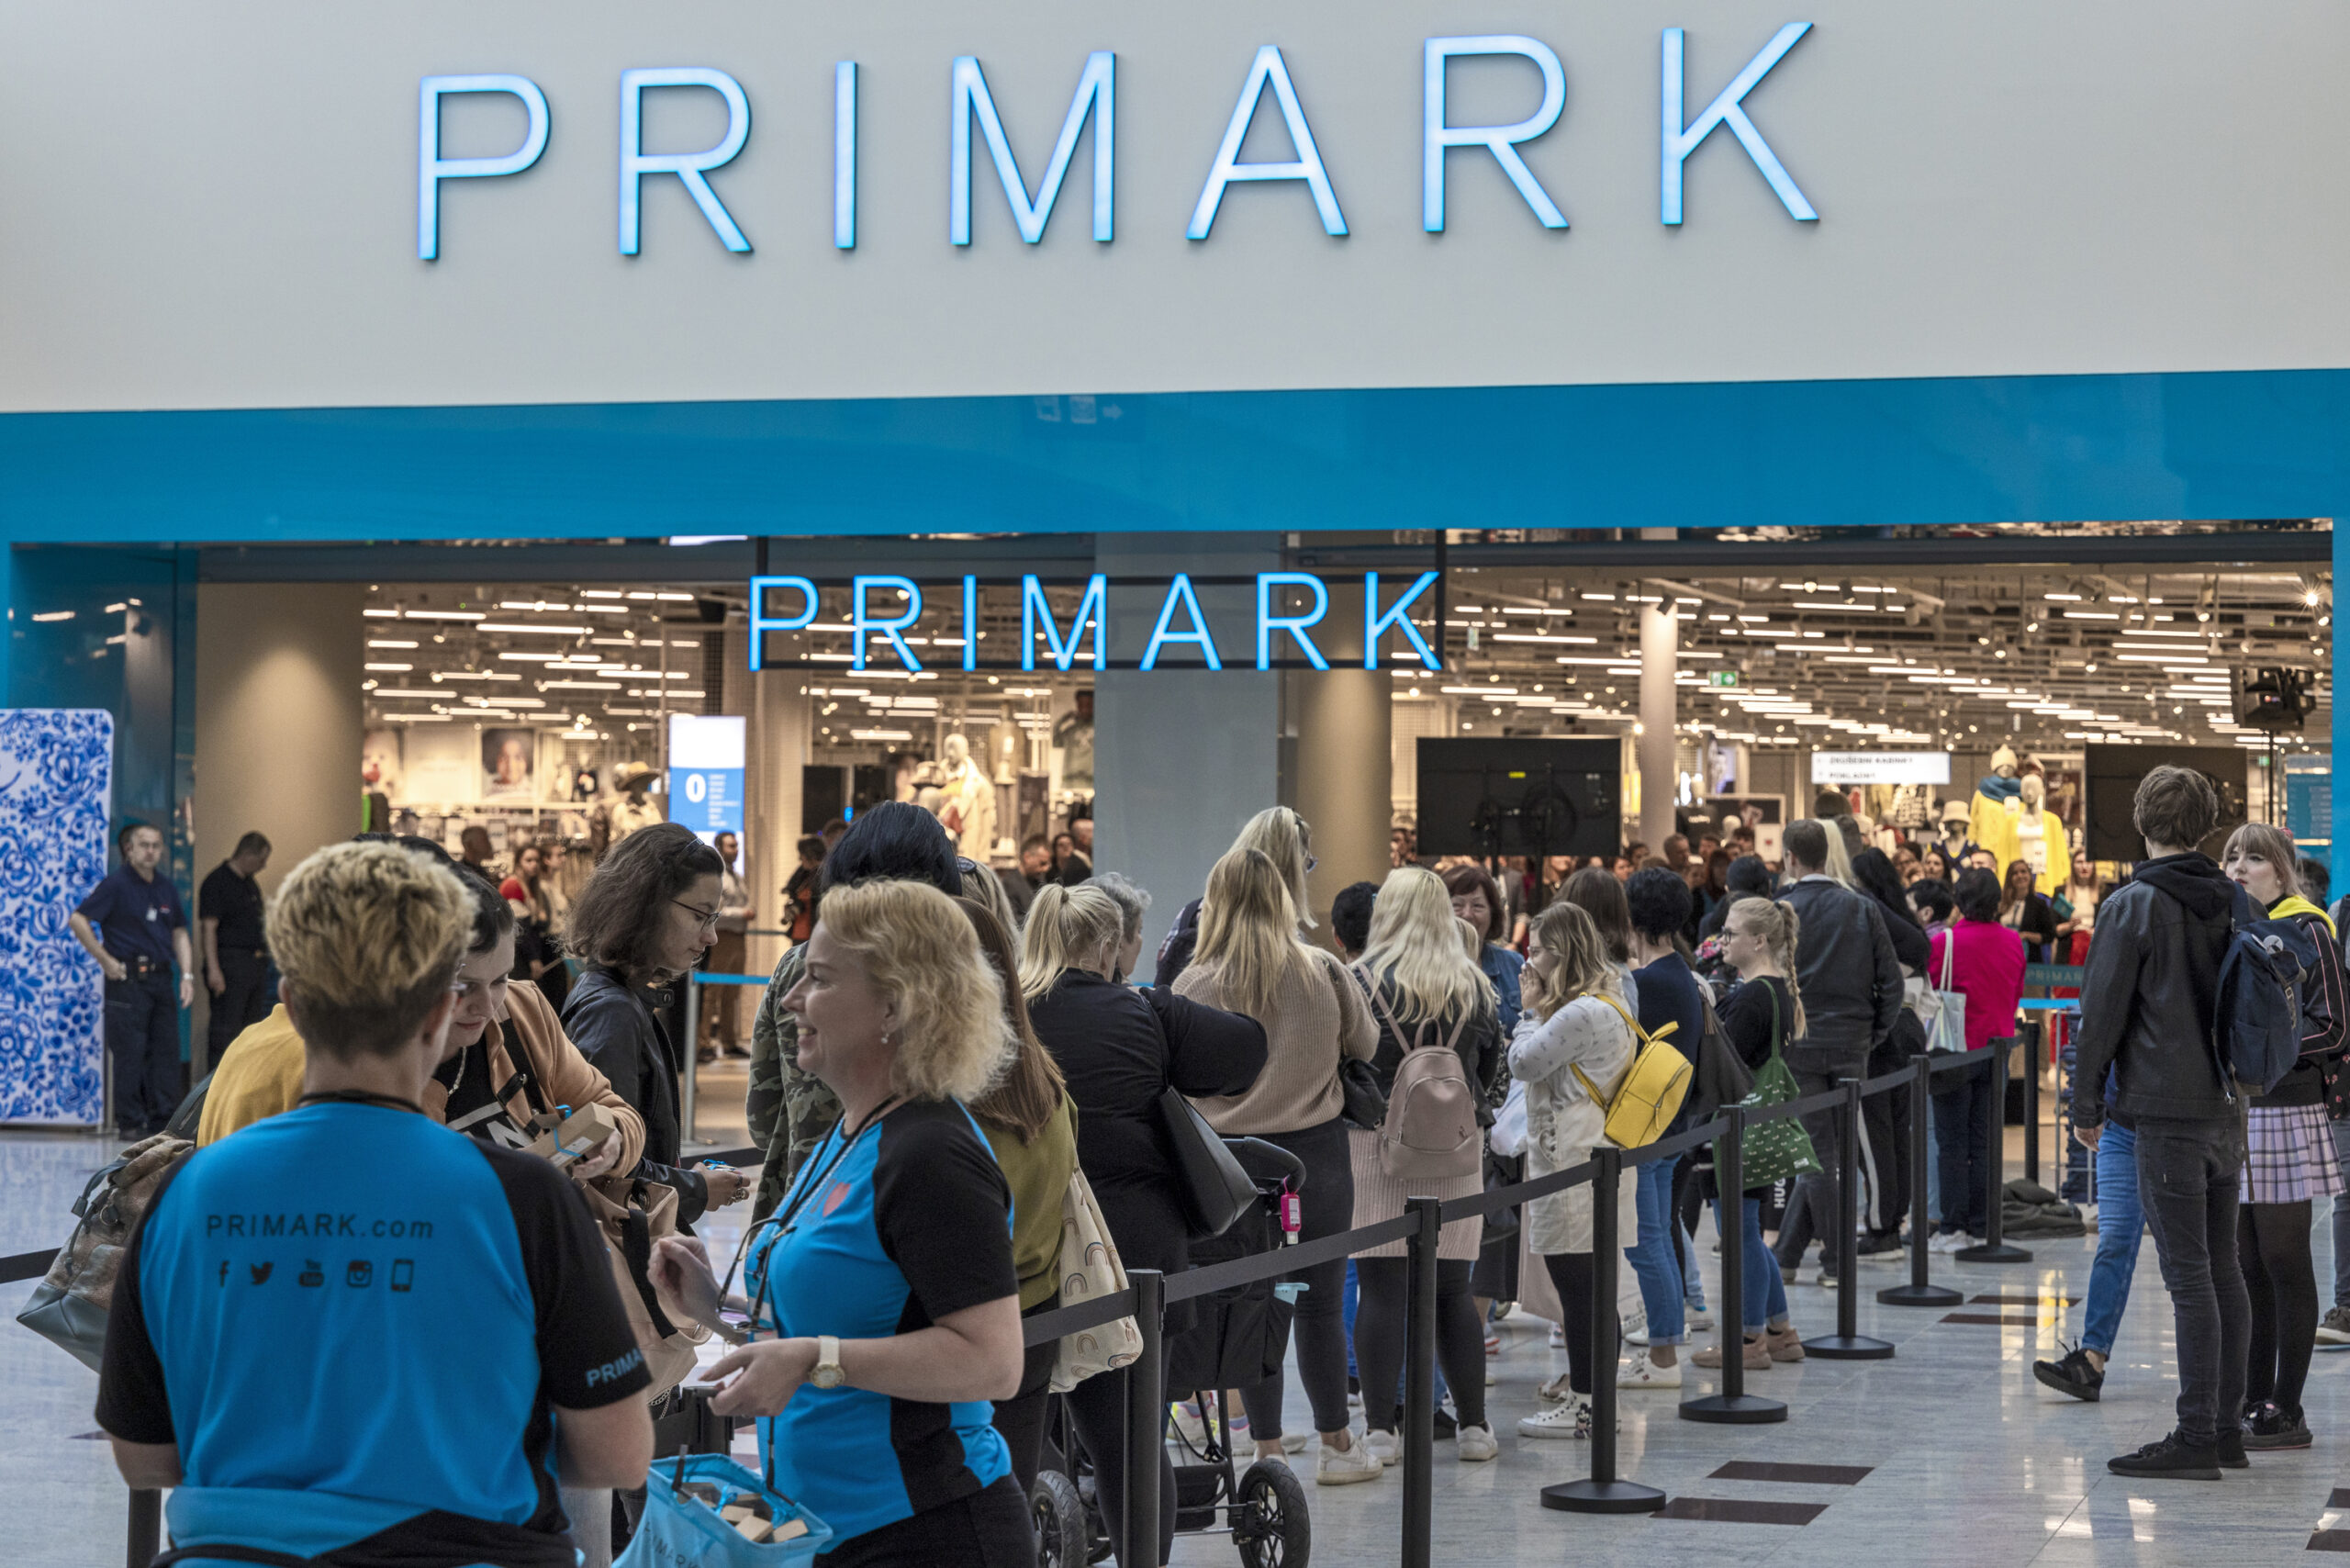 Primark - Cushman & Wakefield Retail Leasing